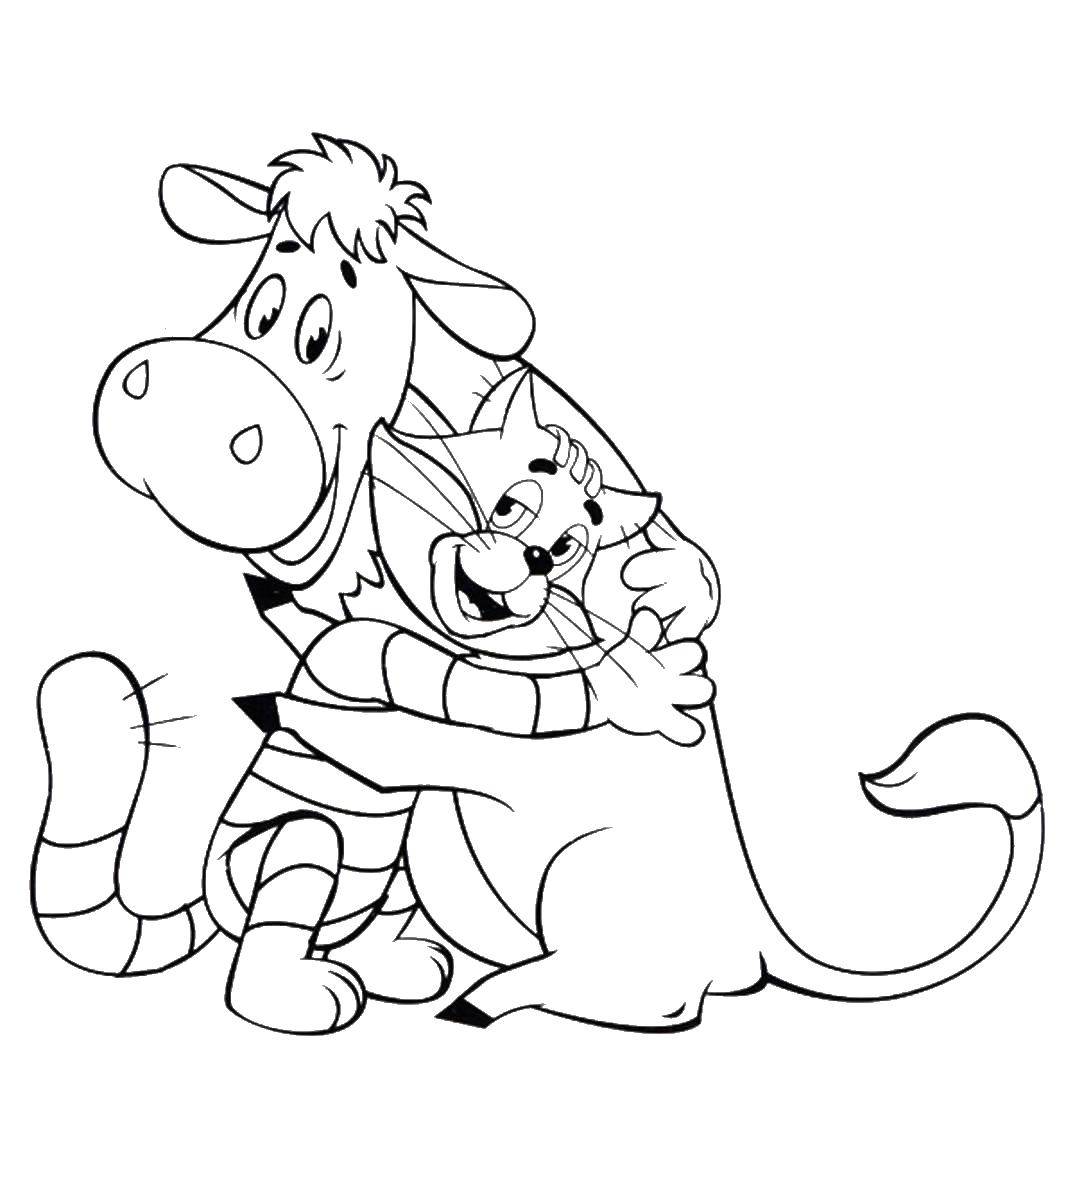 Название: Раскраска Кот матроскин обнимает теленка гаврюша. Категория: раскраски простоквашино. Теги: кот Матроскин, теленок гаврюша.